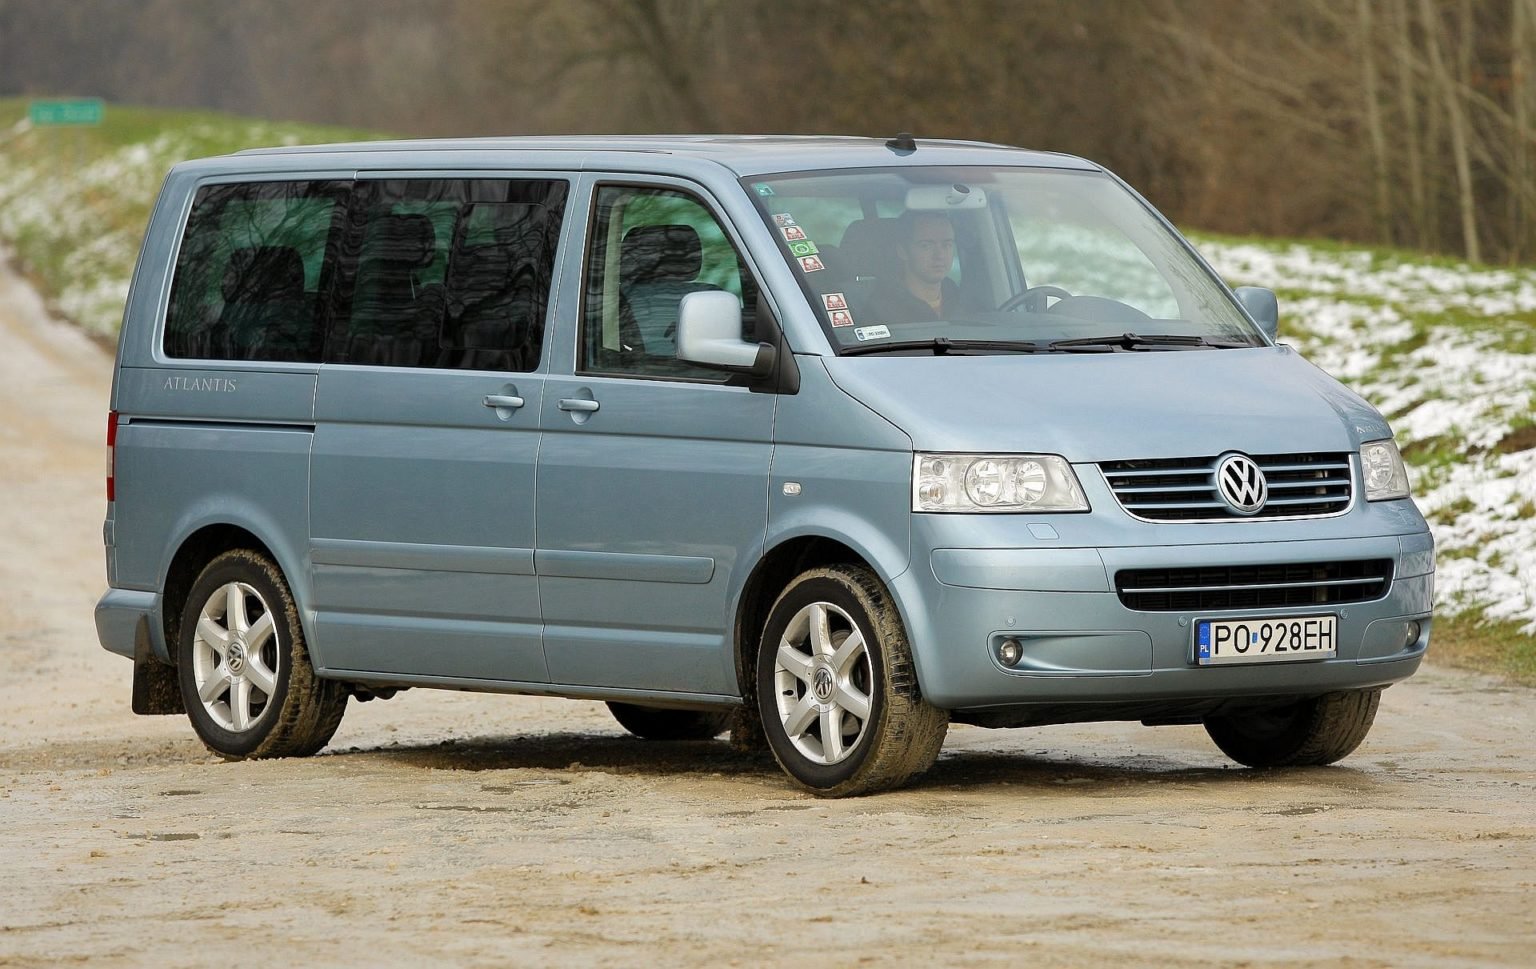 Używany Volkswagen Transporter T5 (20032015) opinie